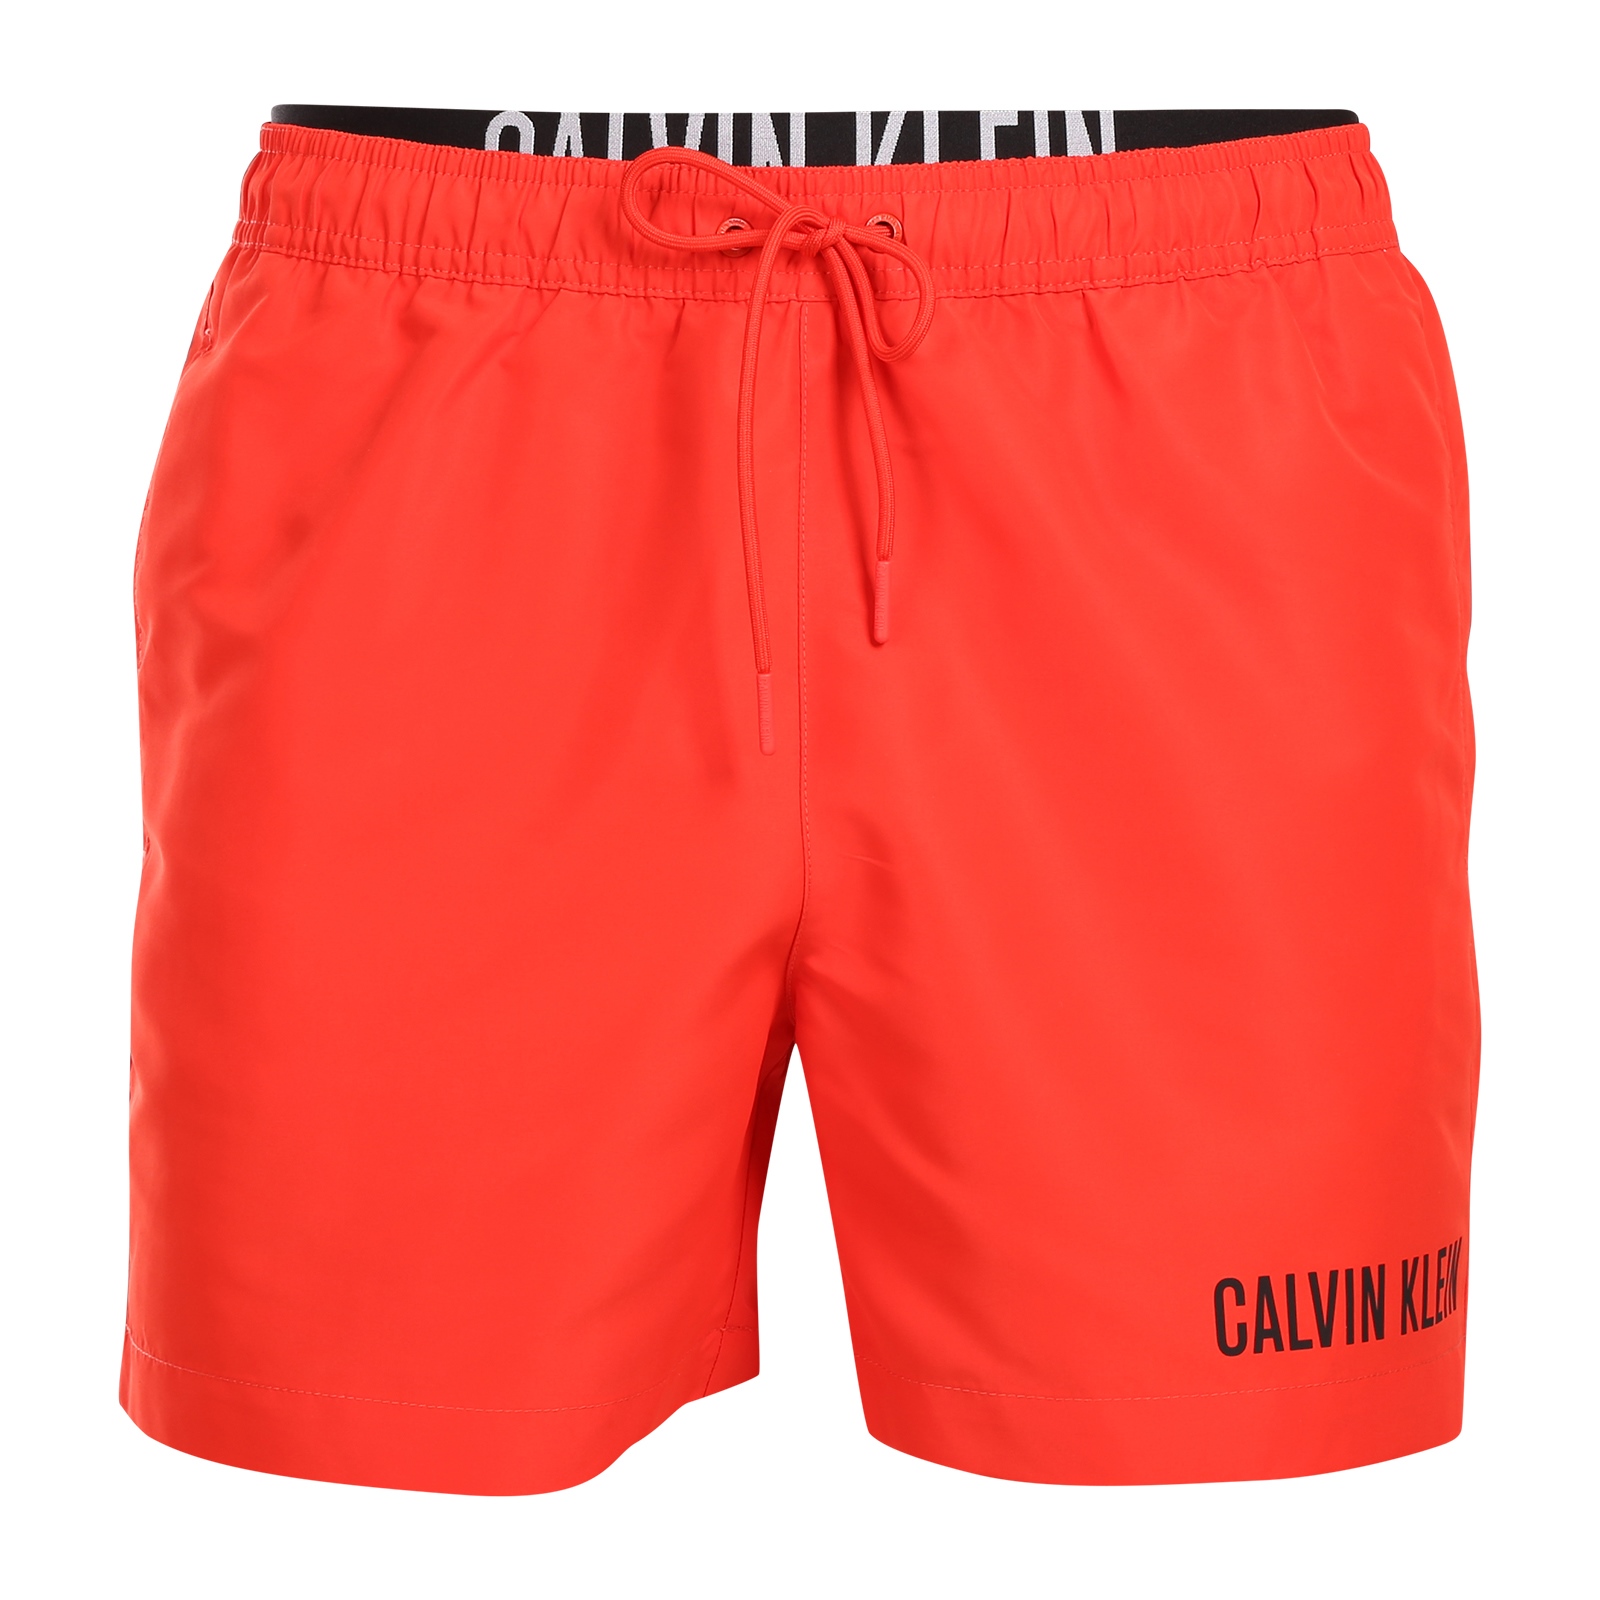 E-shop Pánské plavky Calvin Klein červené